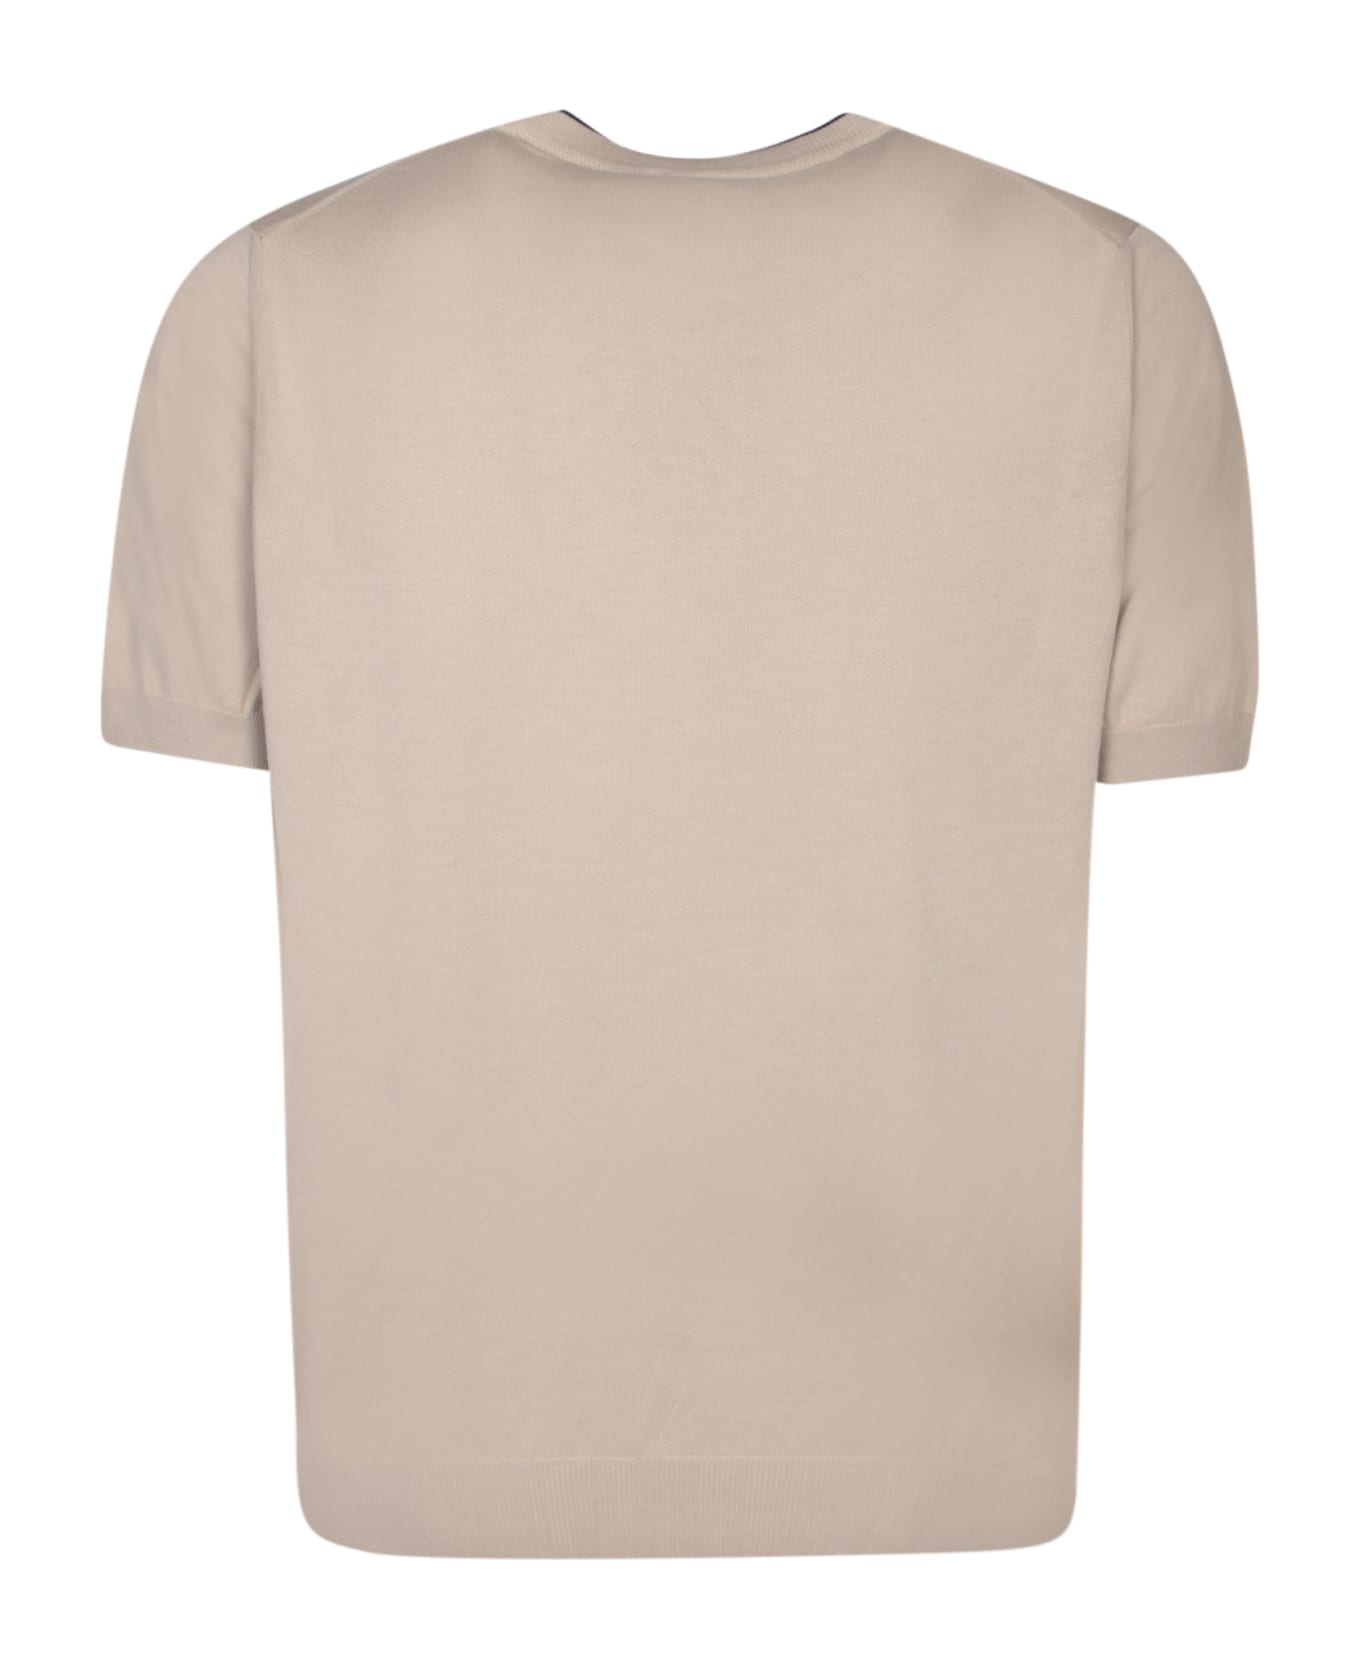 Canali Edges Blue/beige T-shirt - Beige